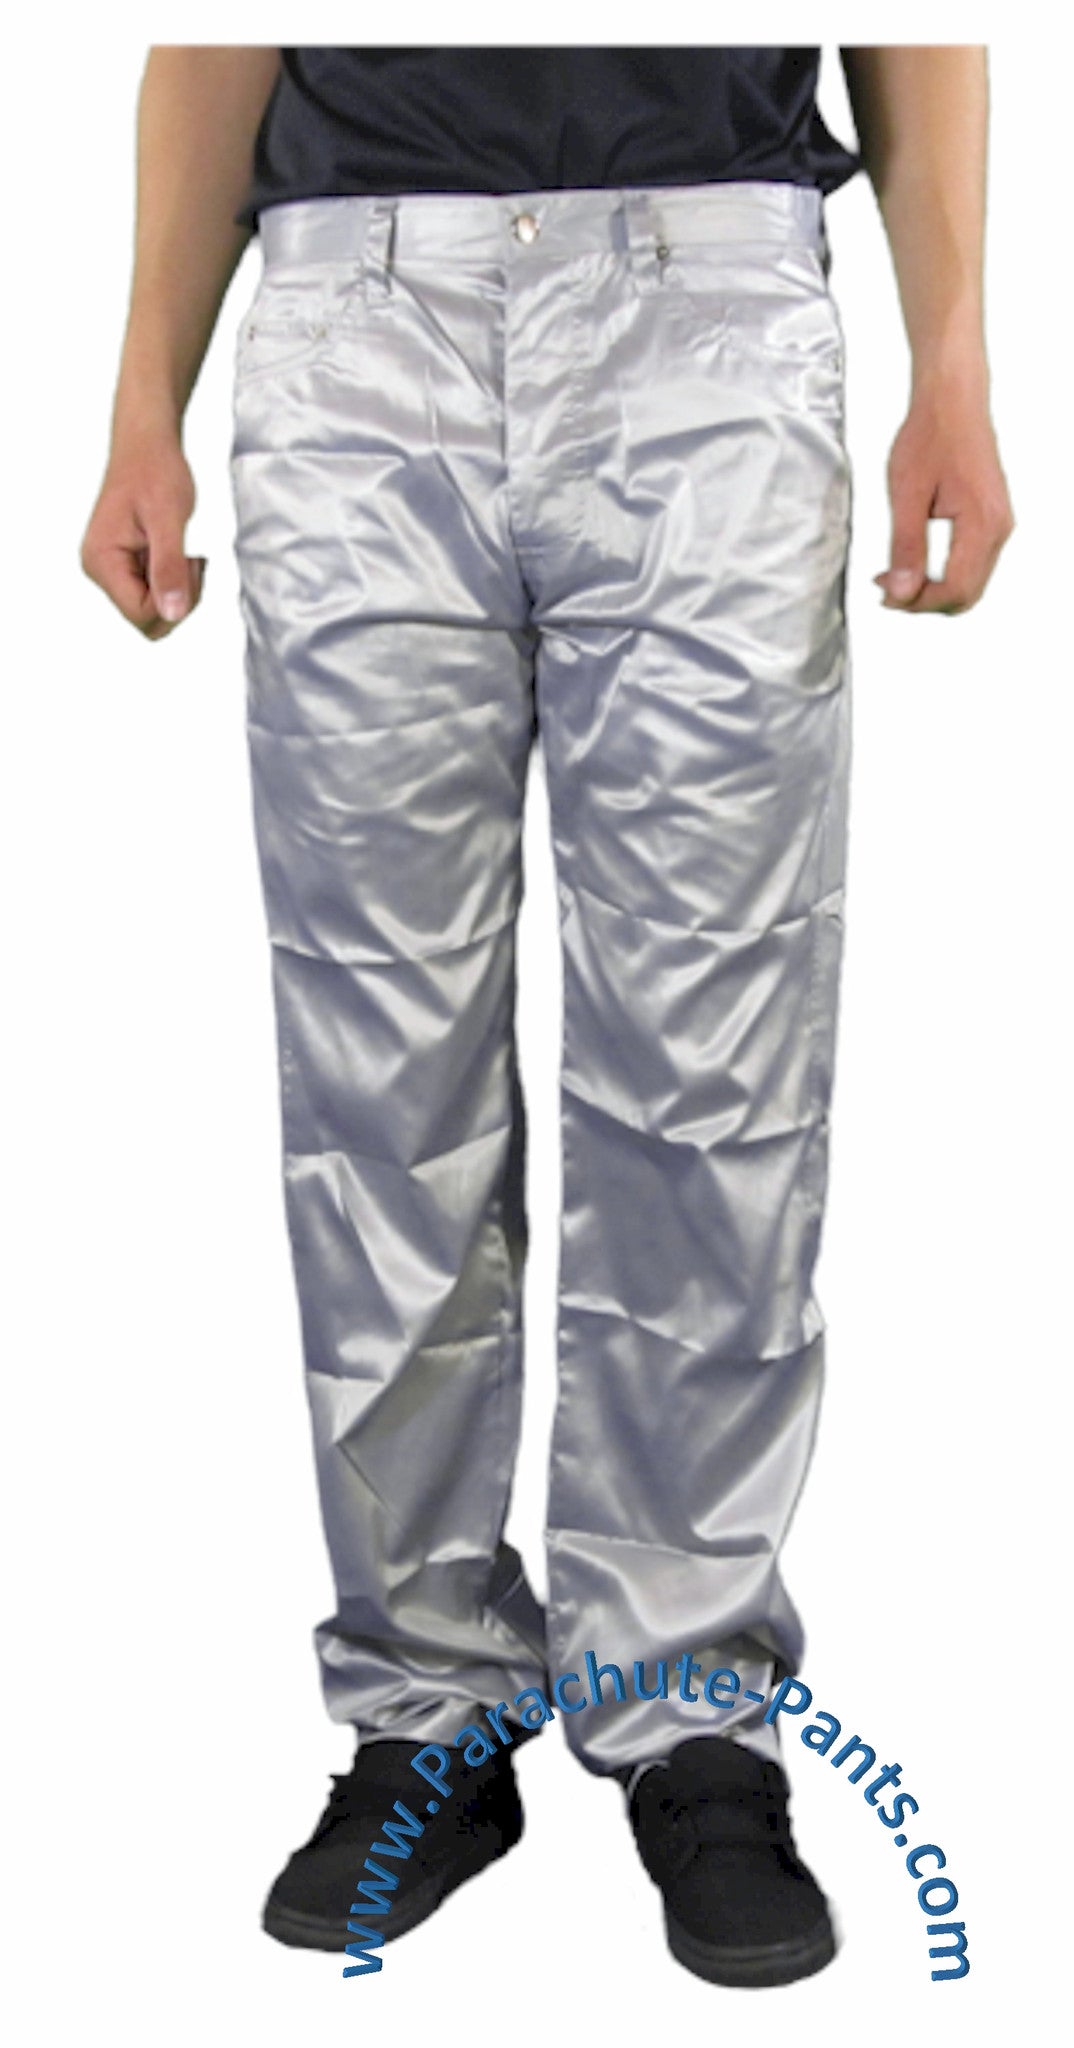 Countdown Silver Shiny Nylon 5-Button Jeans | The Parachute Pants Store